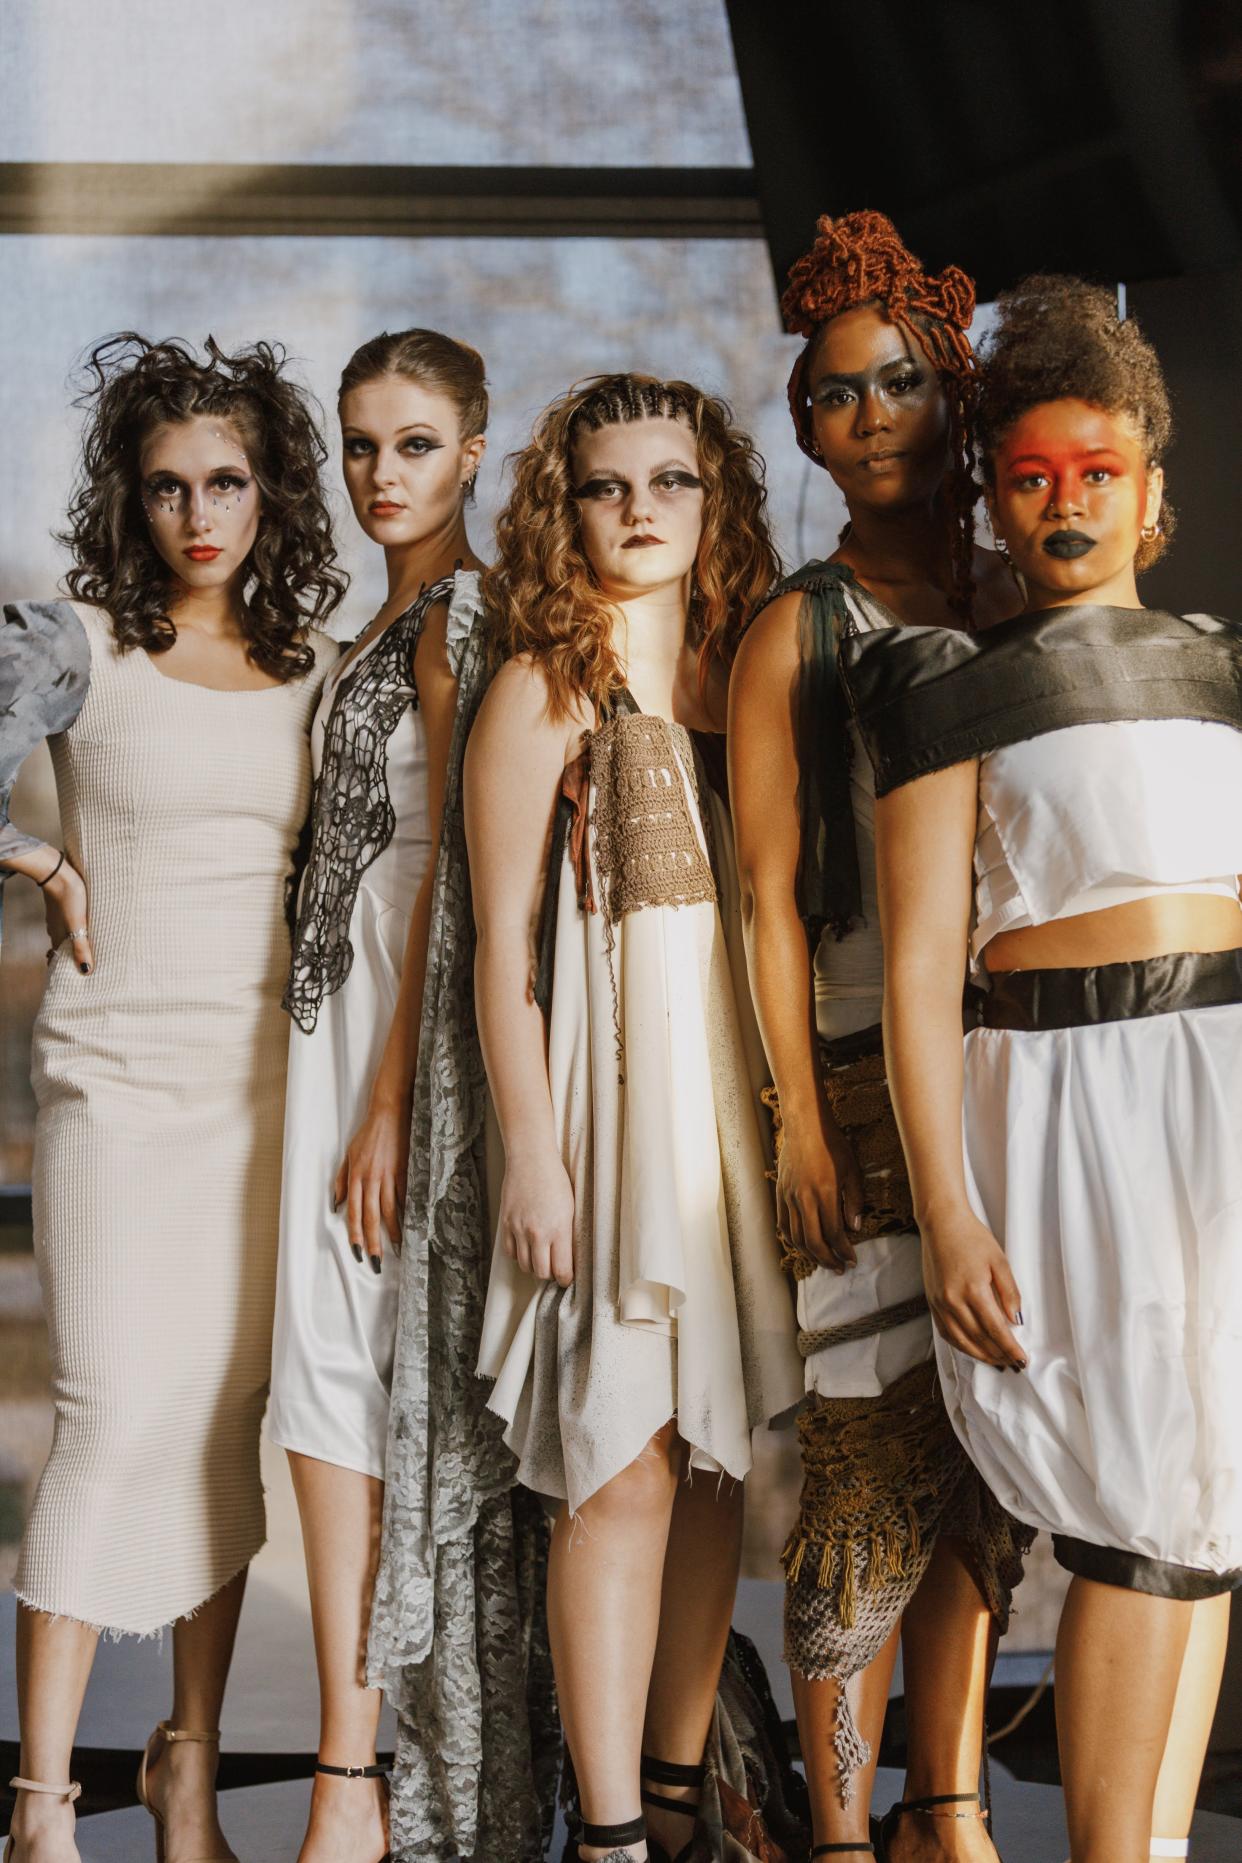 Models during OSU Unchained's 2022 show, wearing designs by Hannah Ferguson. From left to right: Avani Bhalla, Mazie Wechter, Jillian Mundo, Alanis De La Cruz, and Mya English.